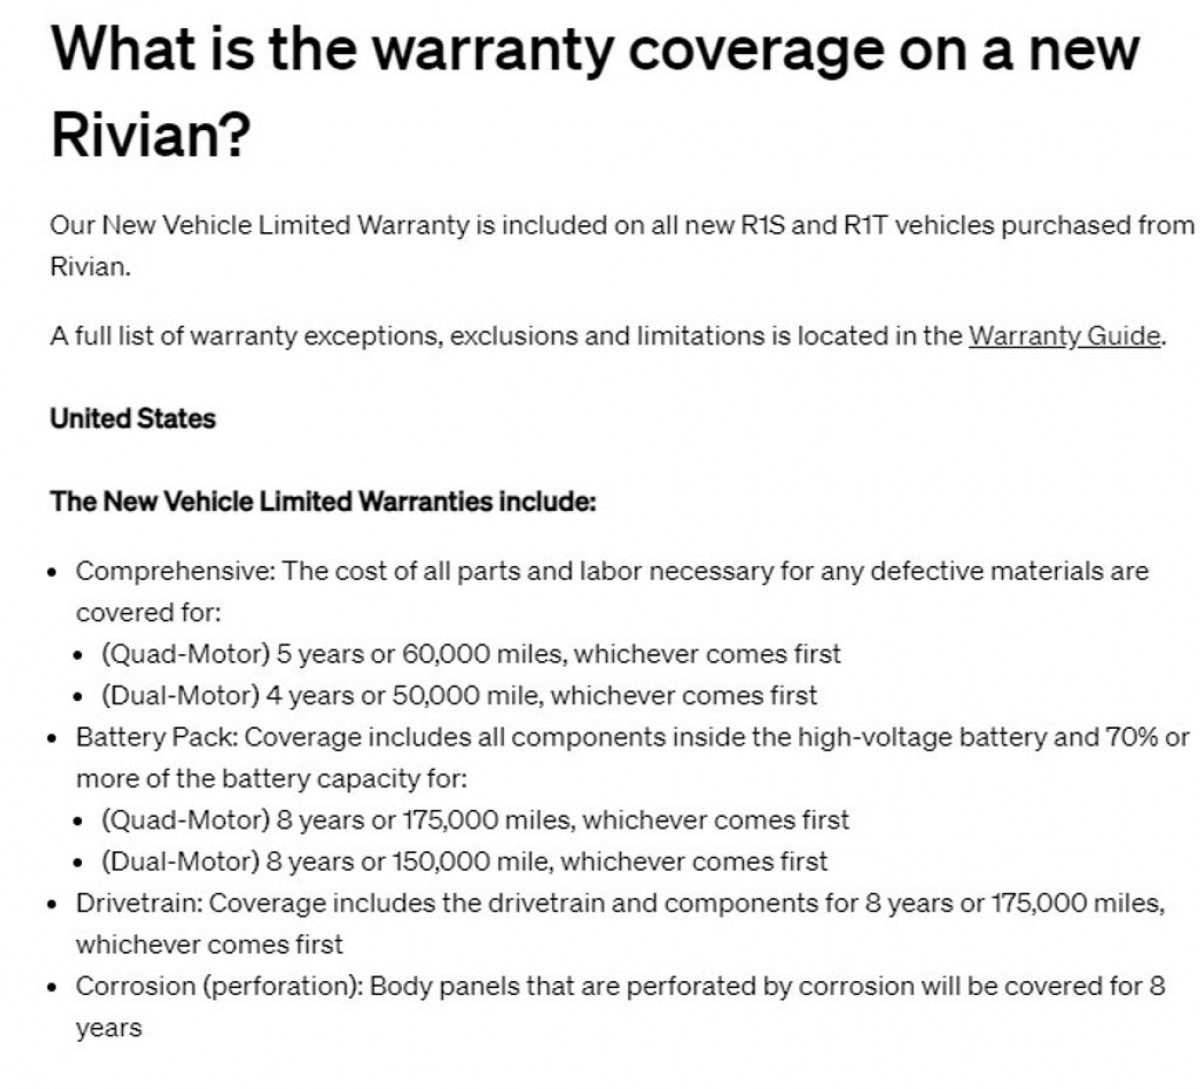 Updated warranty T&C on Rivian's website